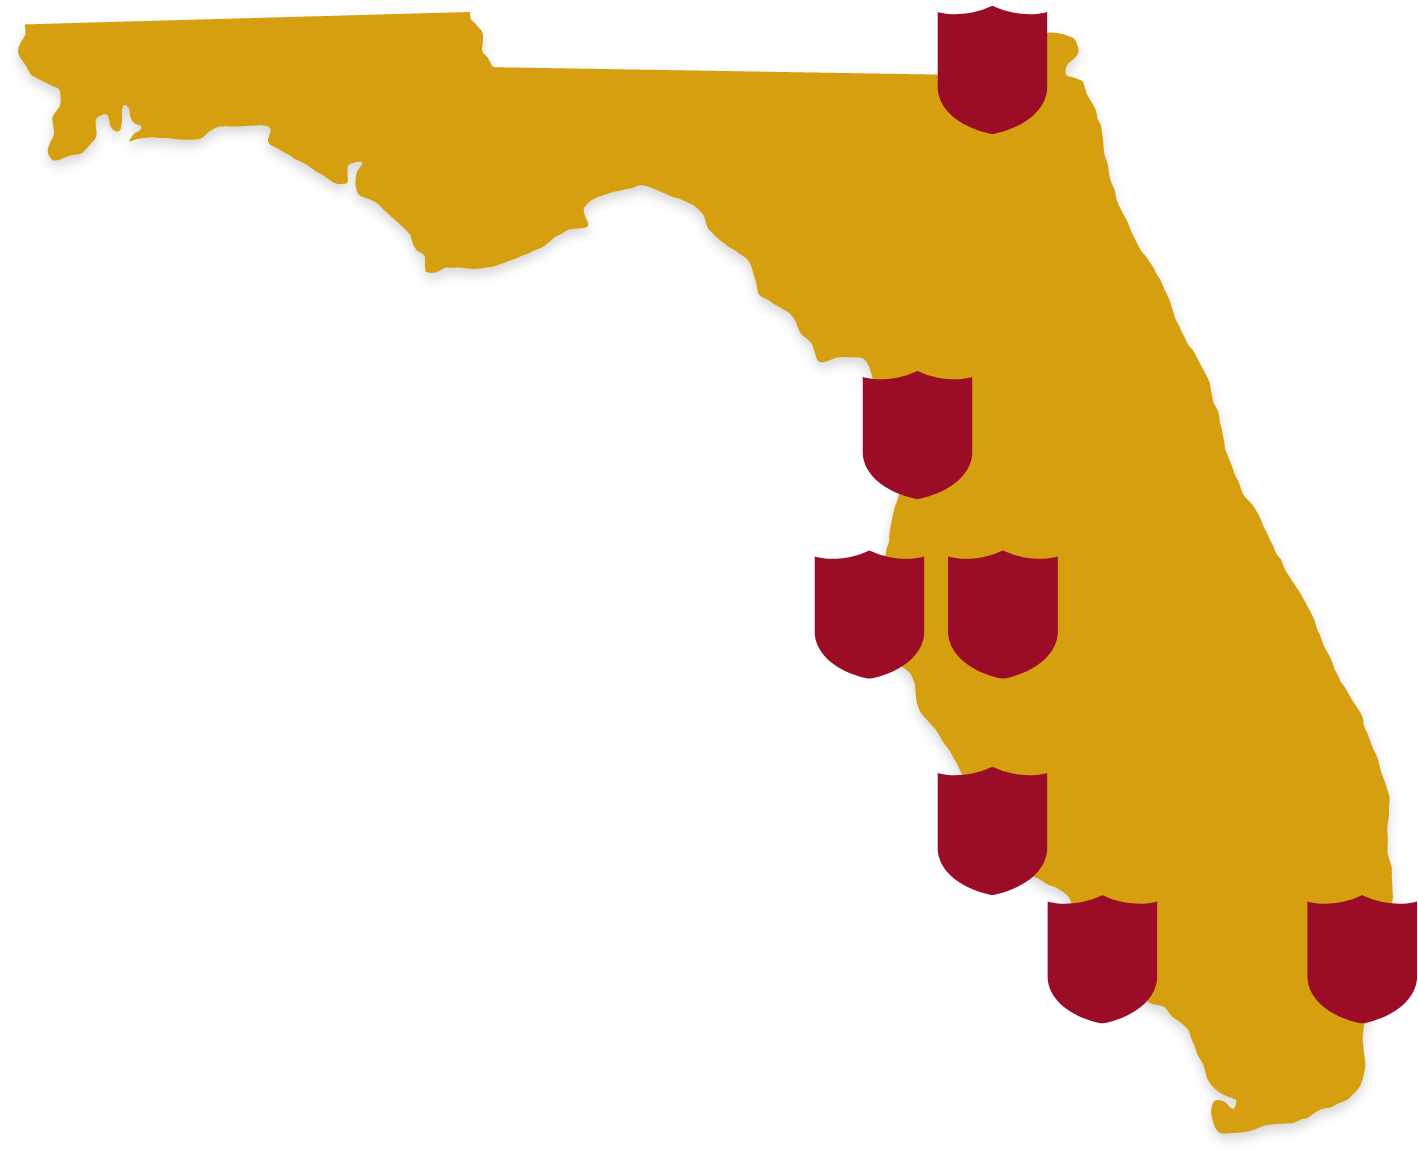 Jersey College School of Nursing Florida Map